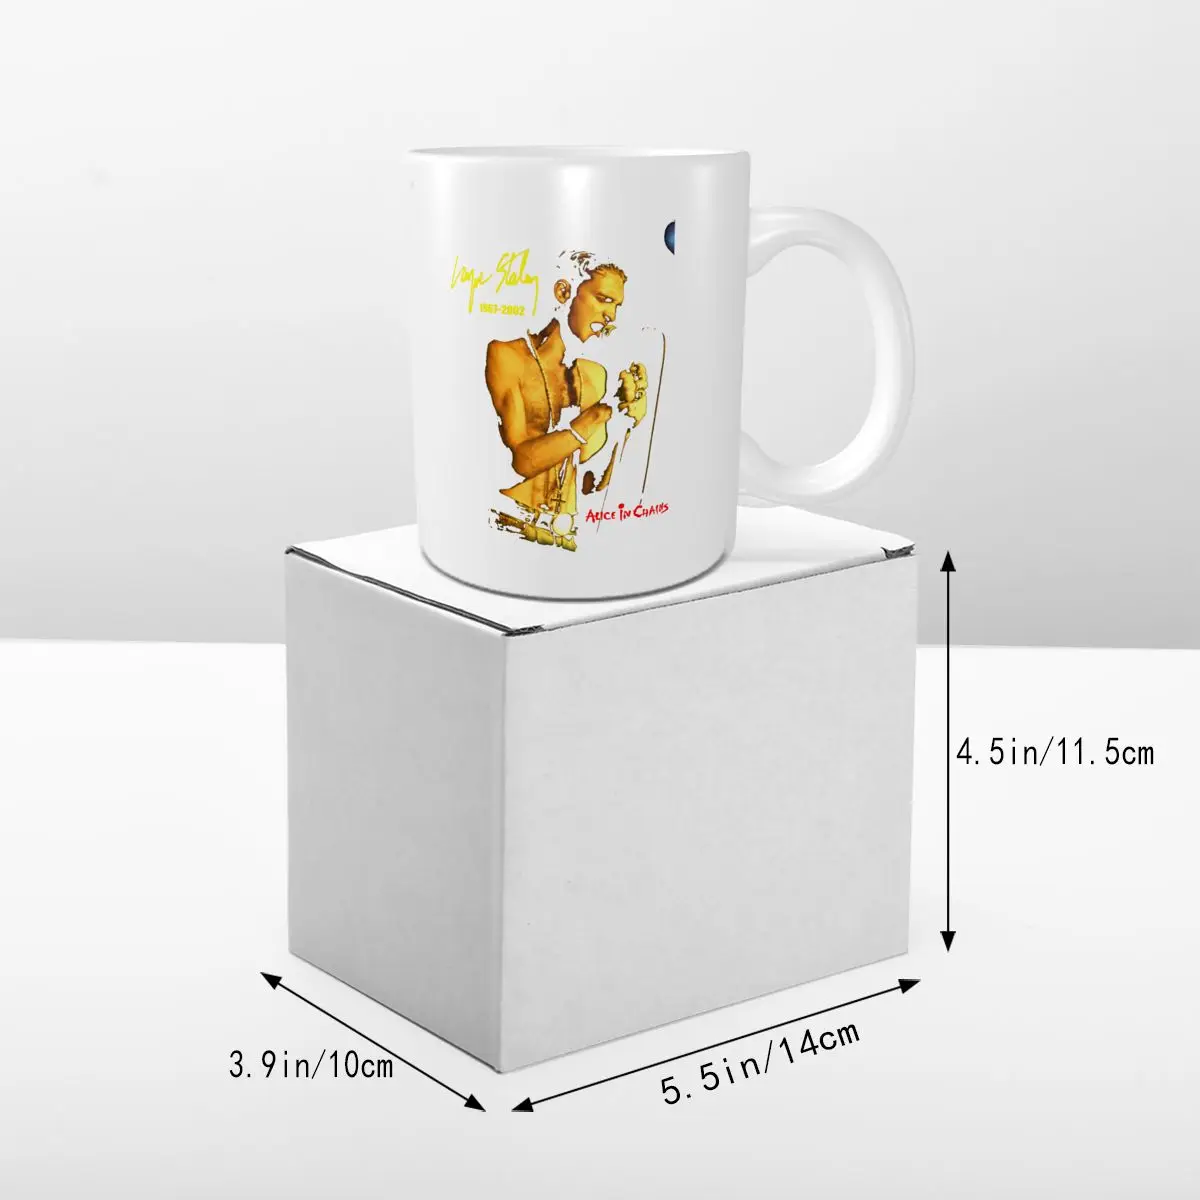 https://ae01.alicdn.com/kf/Sfdd7a64495c14f77a685c610e624e414R/Layne-Staley-Alice-In-Chains-2002-P-239-Mug-Coffee-Mugs-Tea-Cups-Home-Drinkware-Cup.jpg